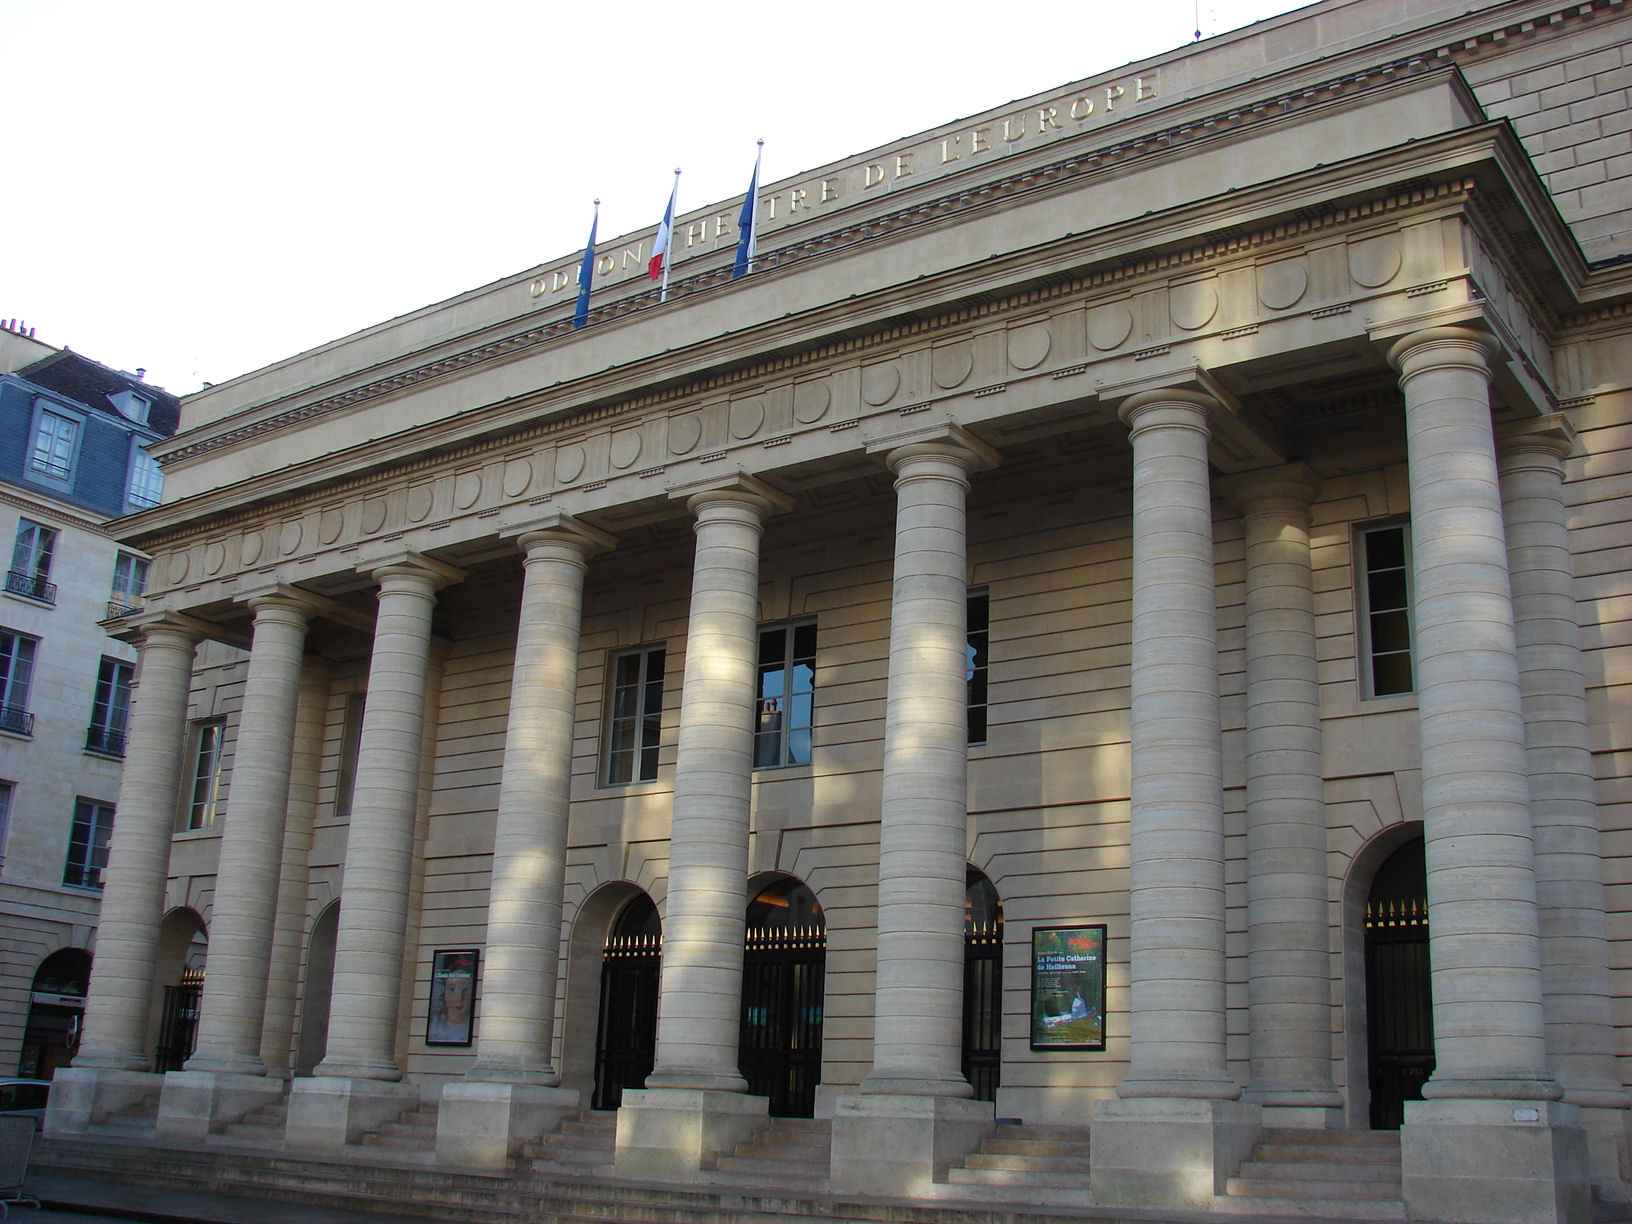 Odéon Theater